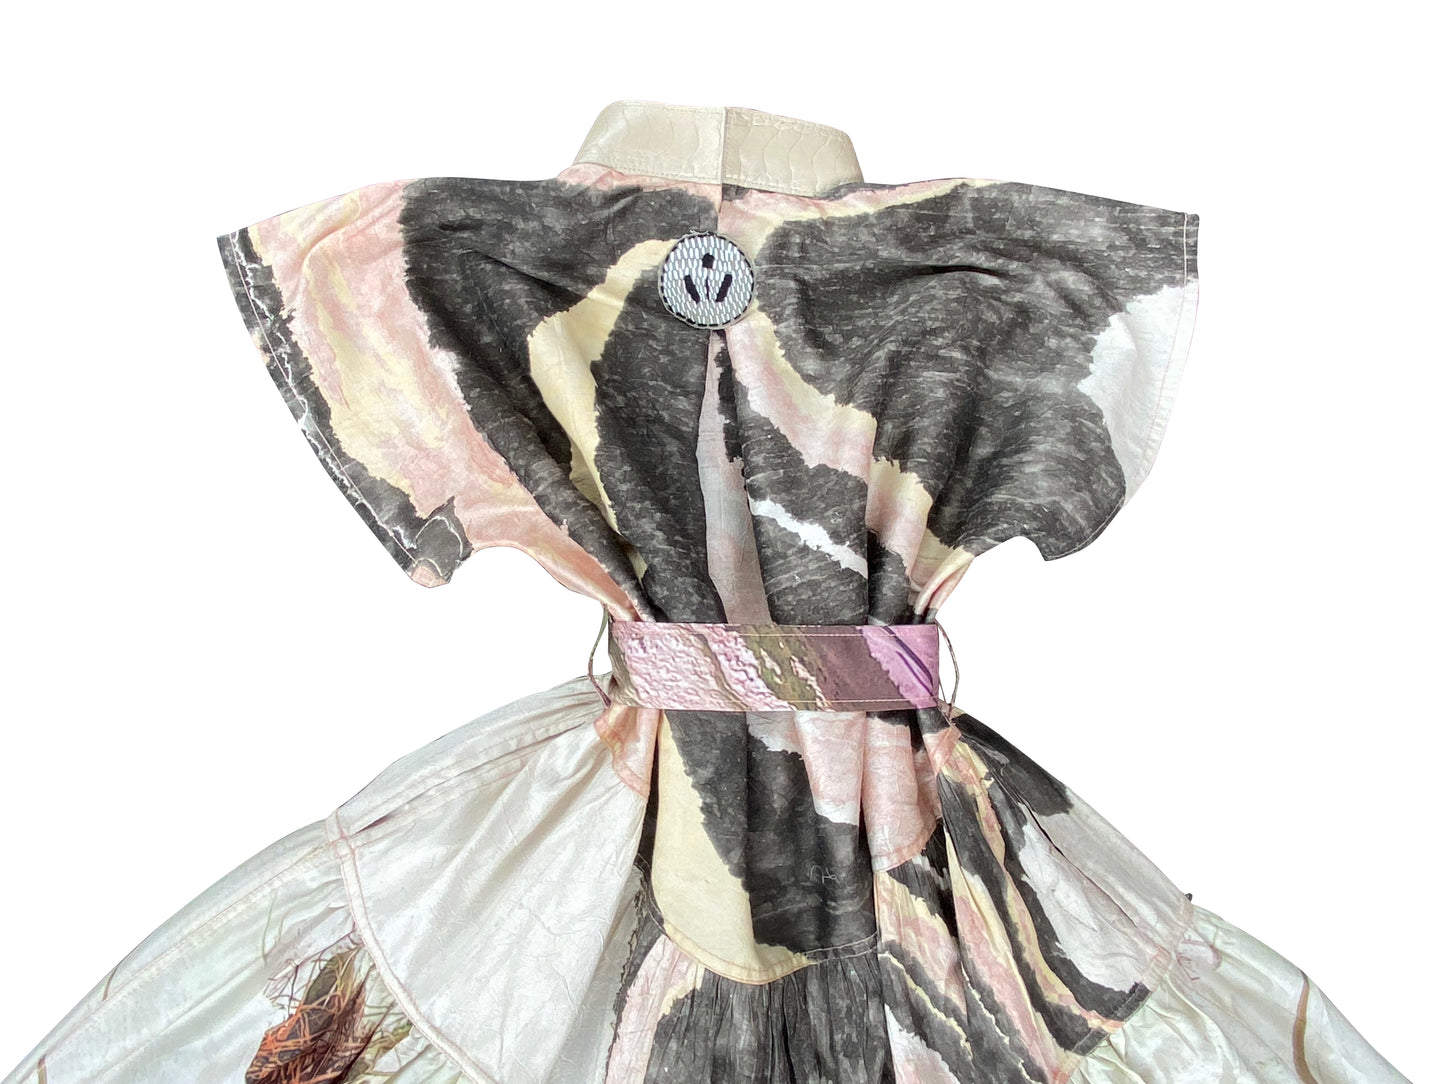 Suminigashi Ochre & Mirror Magic Silk Maxi Dress with Original 'Viviers' Print & Ostrich Shin Collars